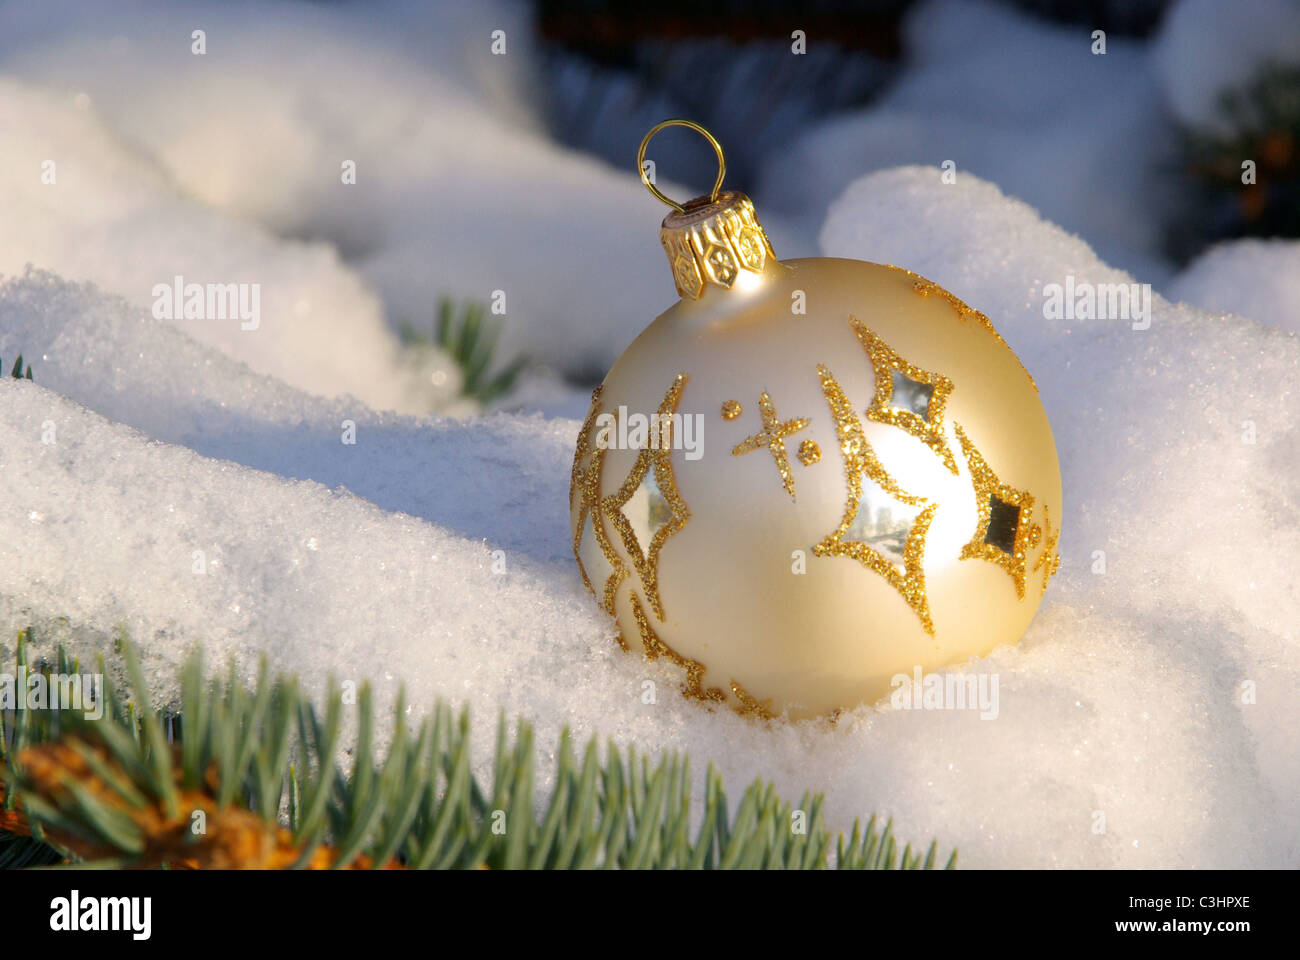 Weihnachtskugel im Schnee - christmas ball in snow 01 Stock Photo